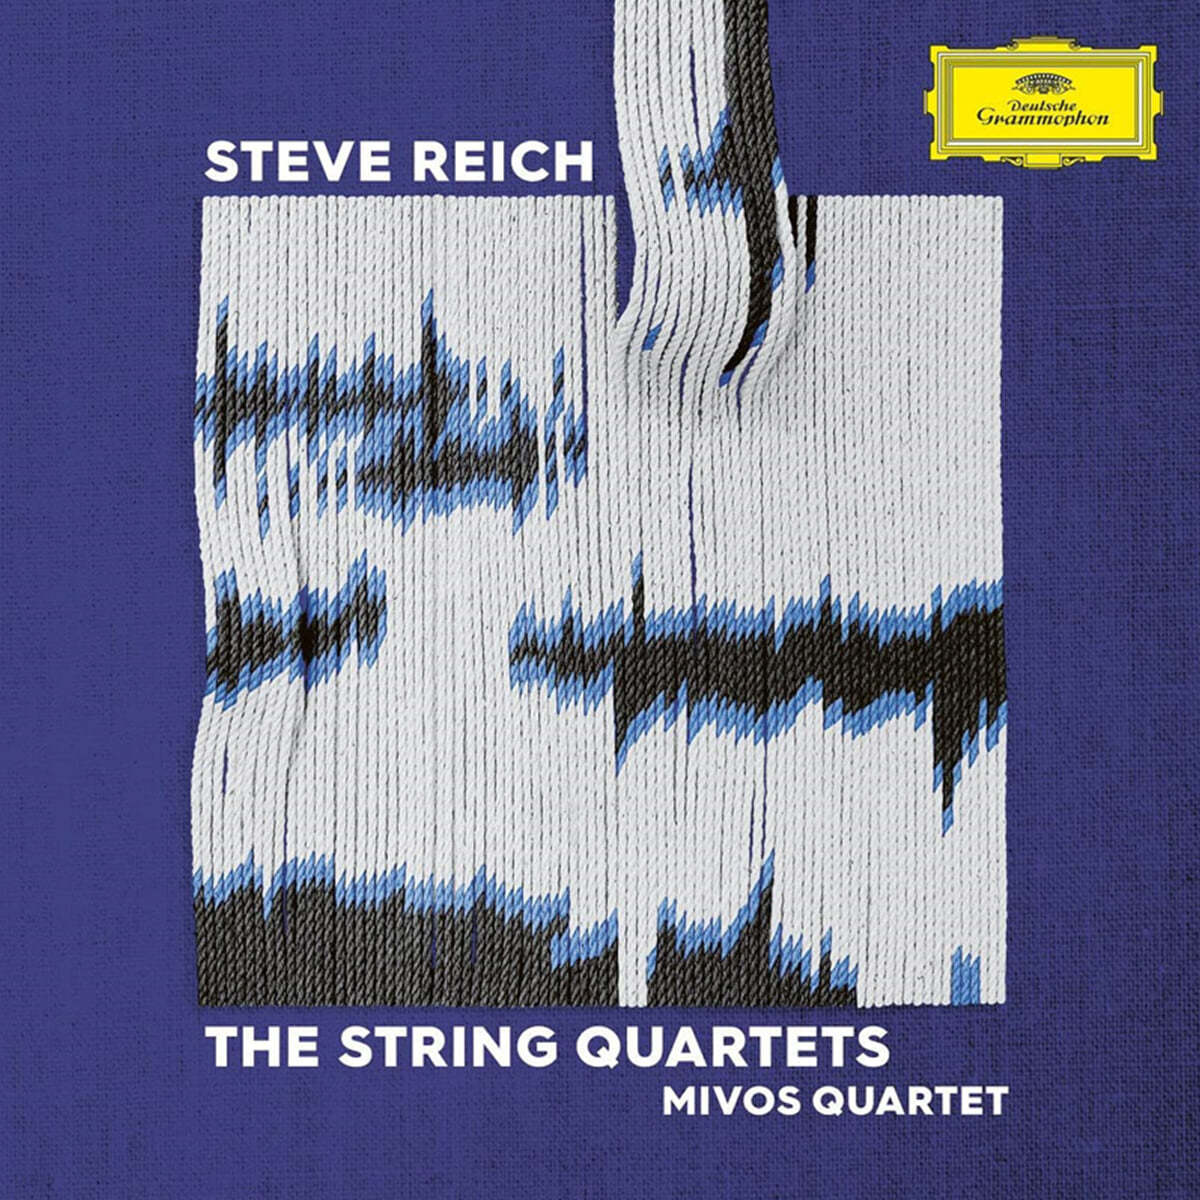 Mivos Quartet 스티브 라이히: 현악 사중주 (Steve Reich: The String Quartets)